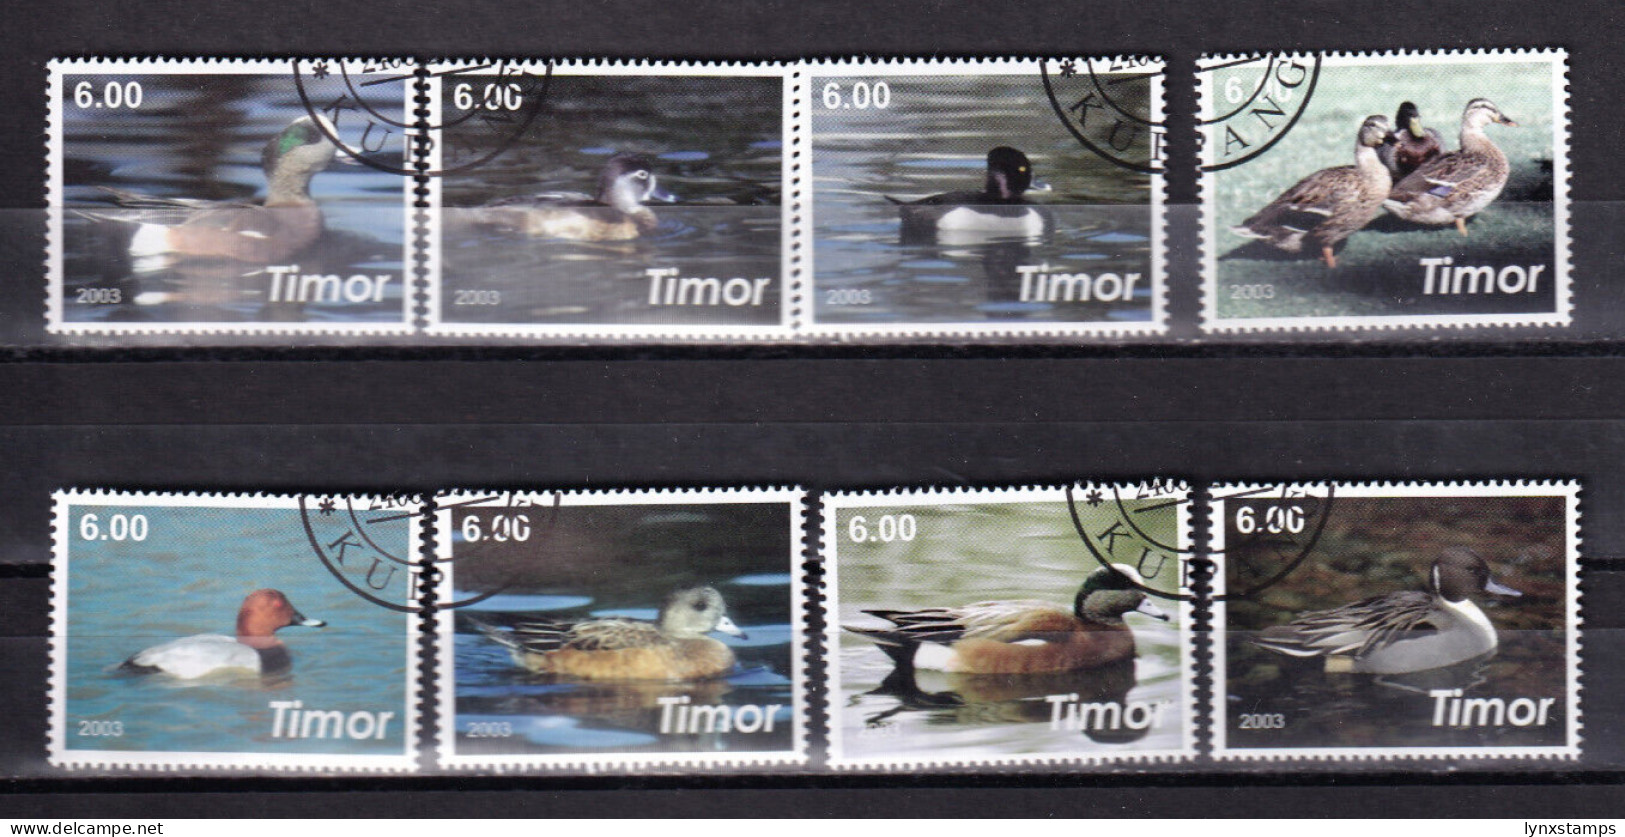 LI07 Timor 2003 Ducks Cinderella Used Stamps - Erinofilia